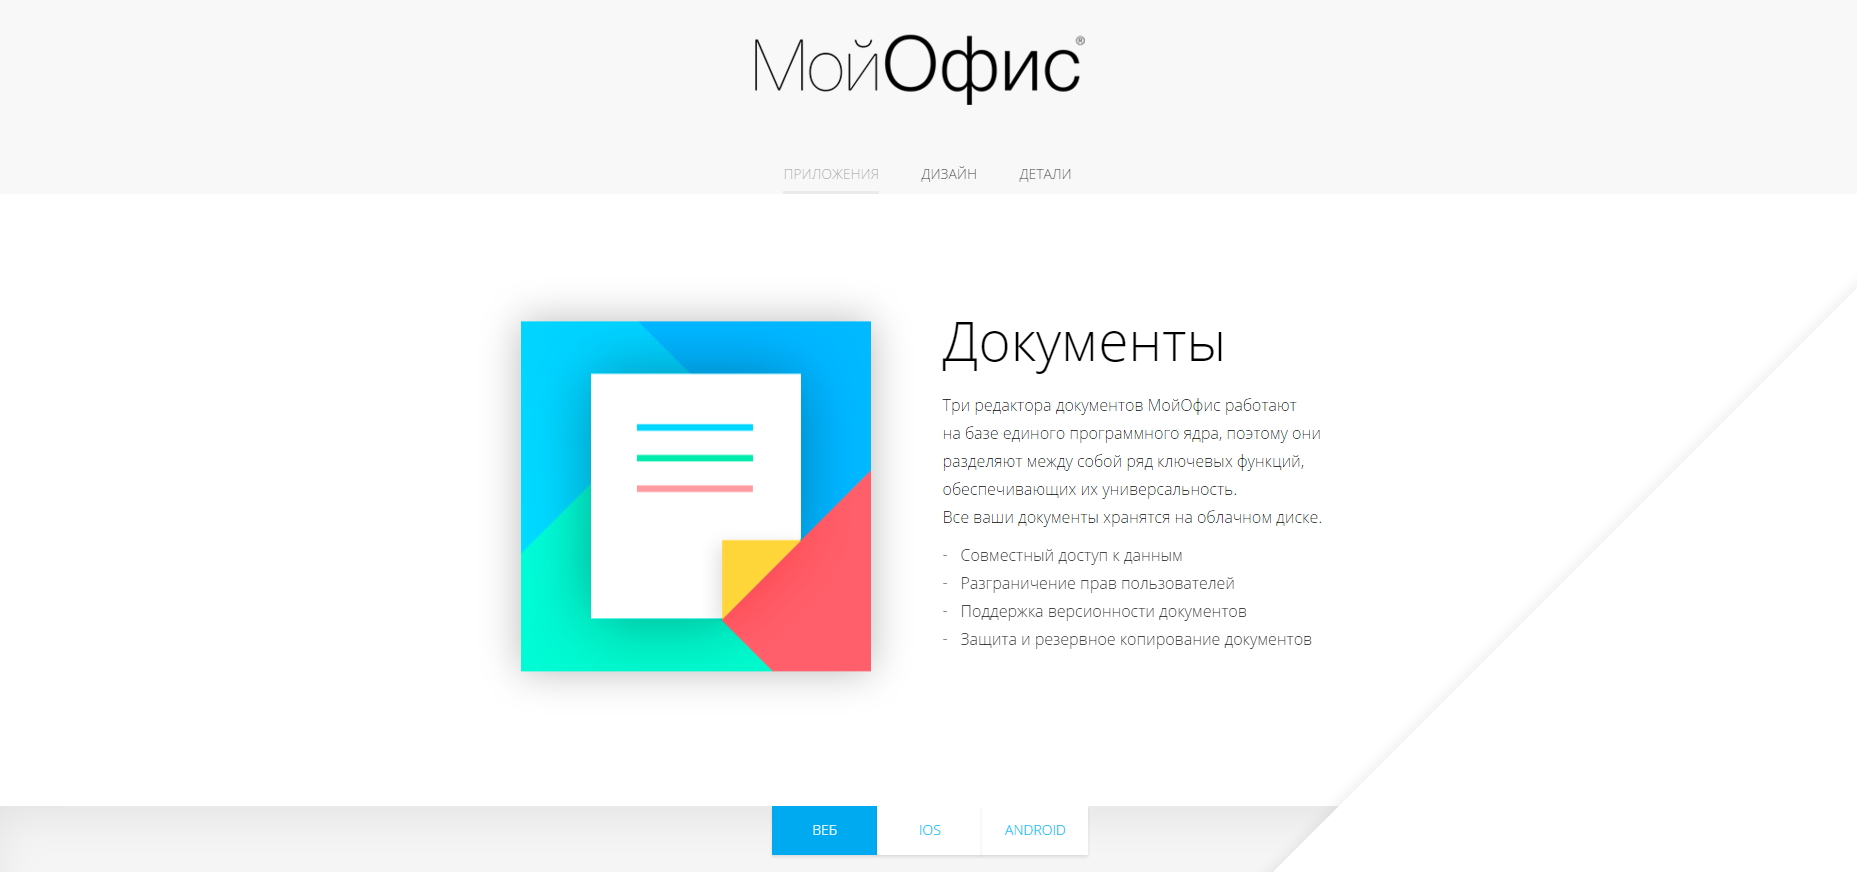 Сделано в России: Разработчики представили аналог Microsoft Office